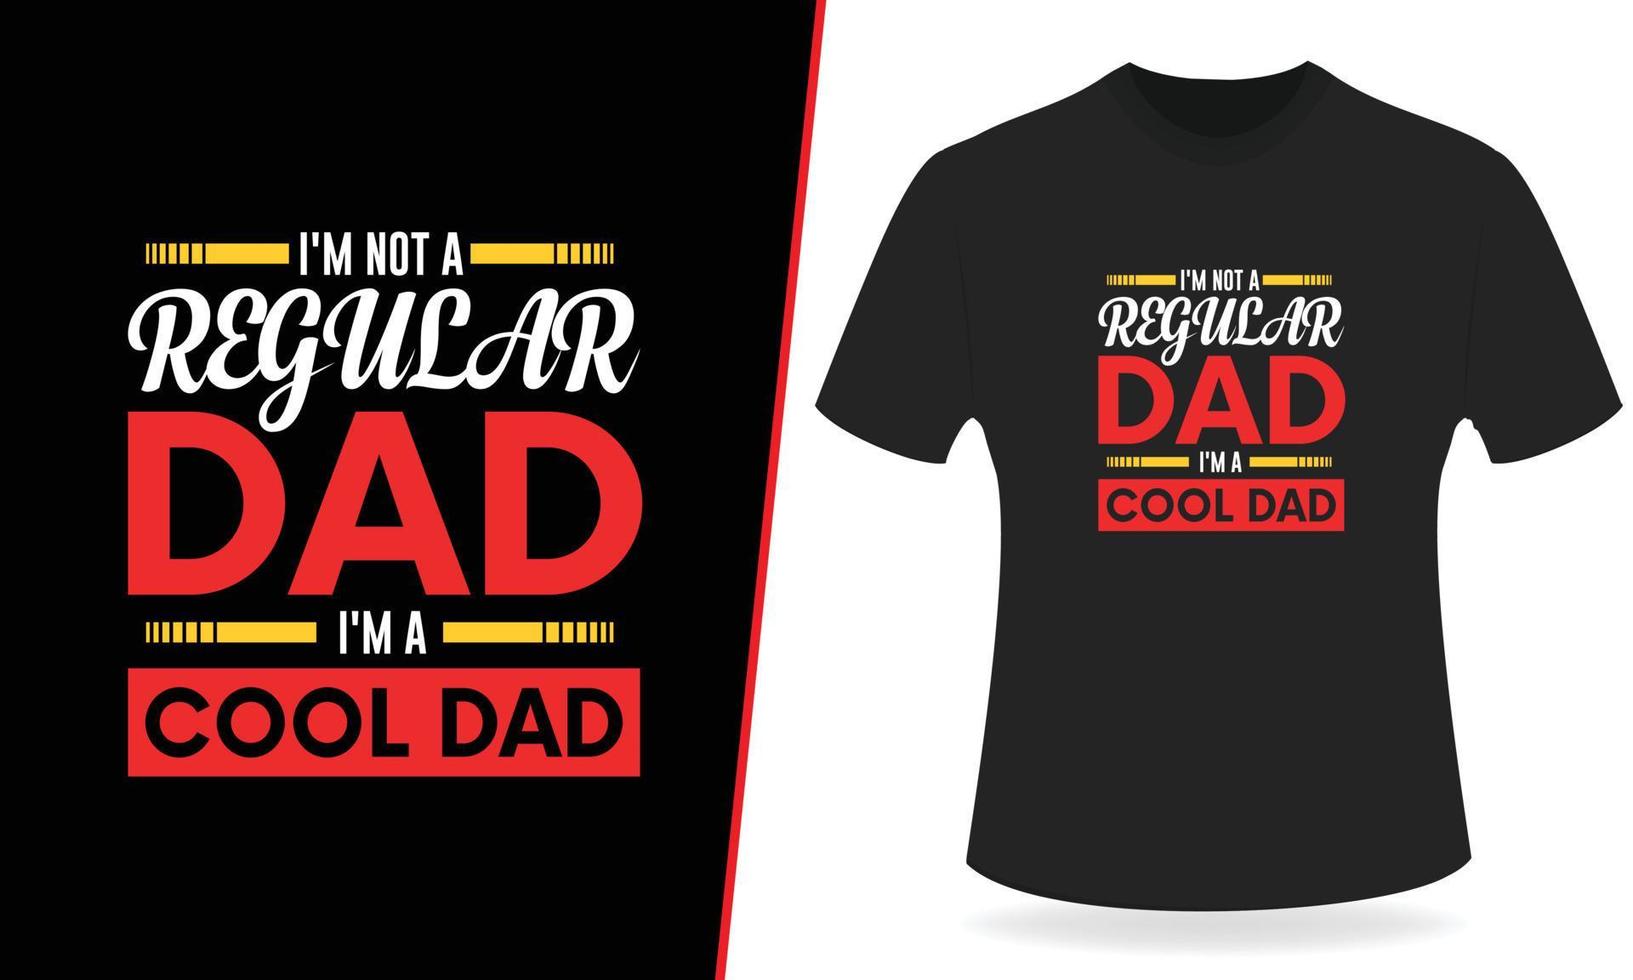 I am a regular dad i am cool dad typography t shirt design vector